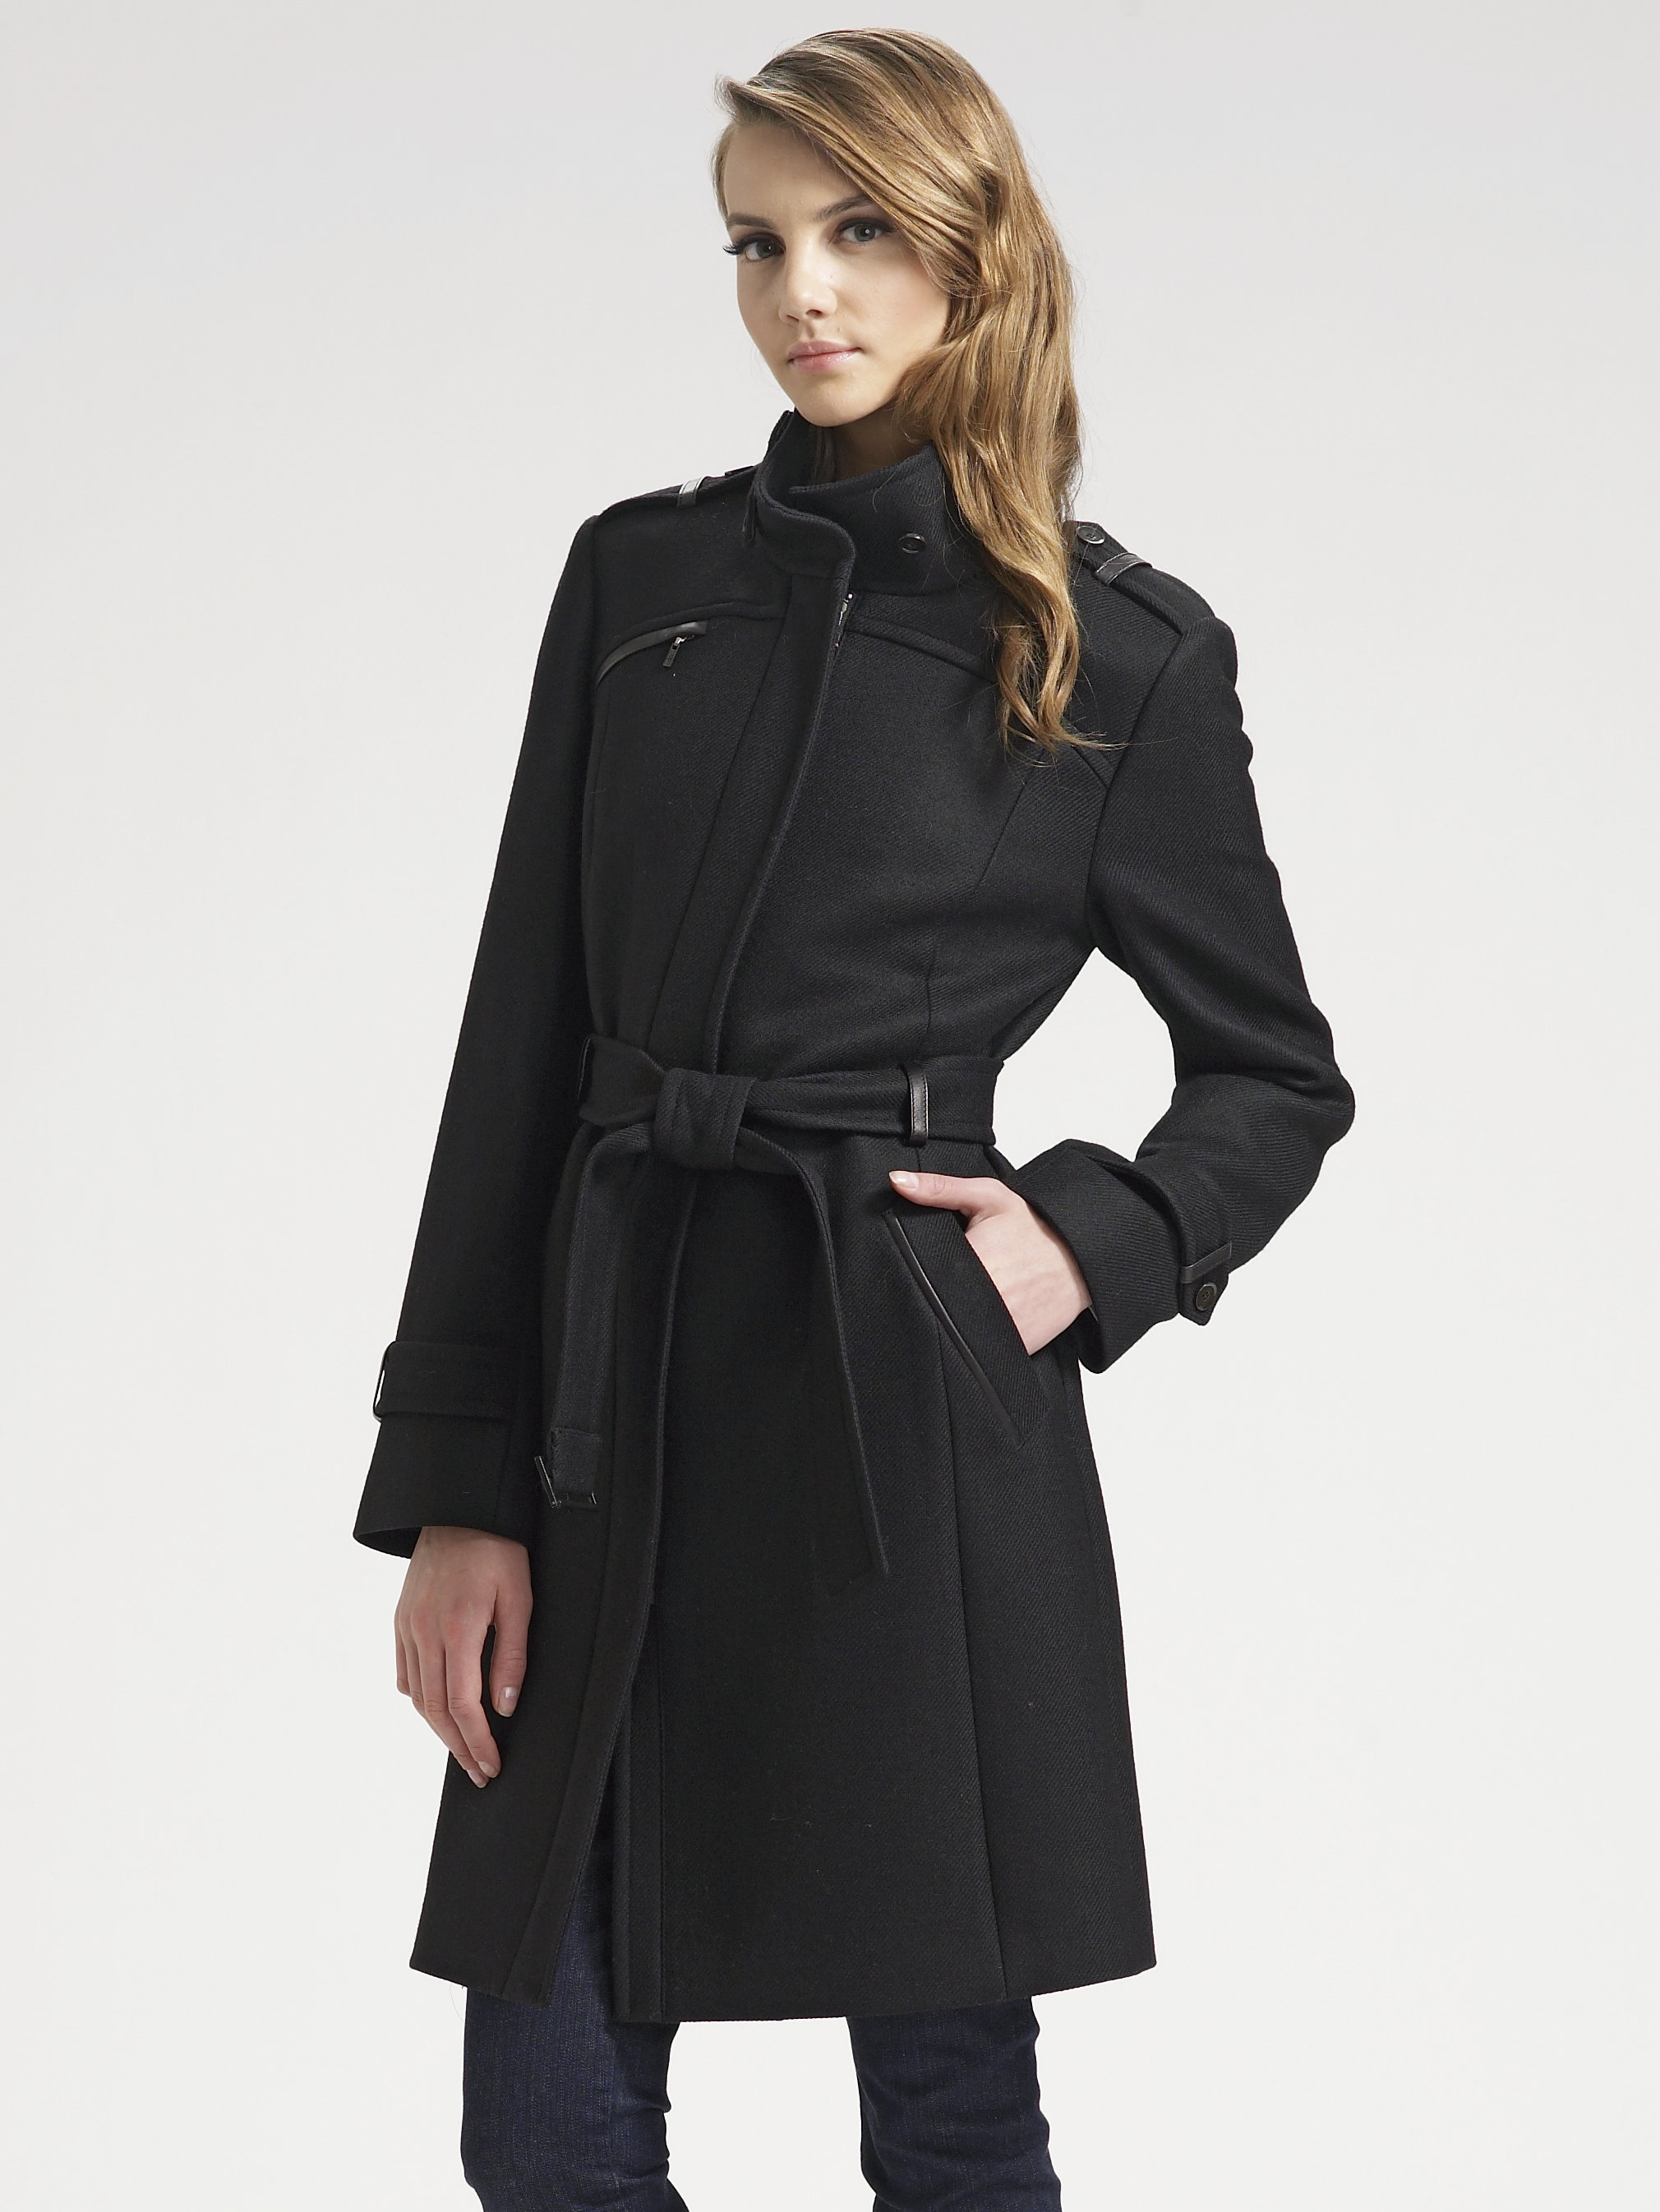 Lyst - Cole haan Belted Wool Coat in Black